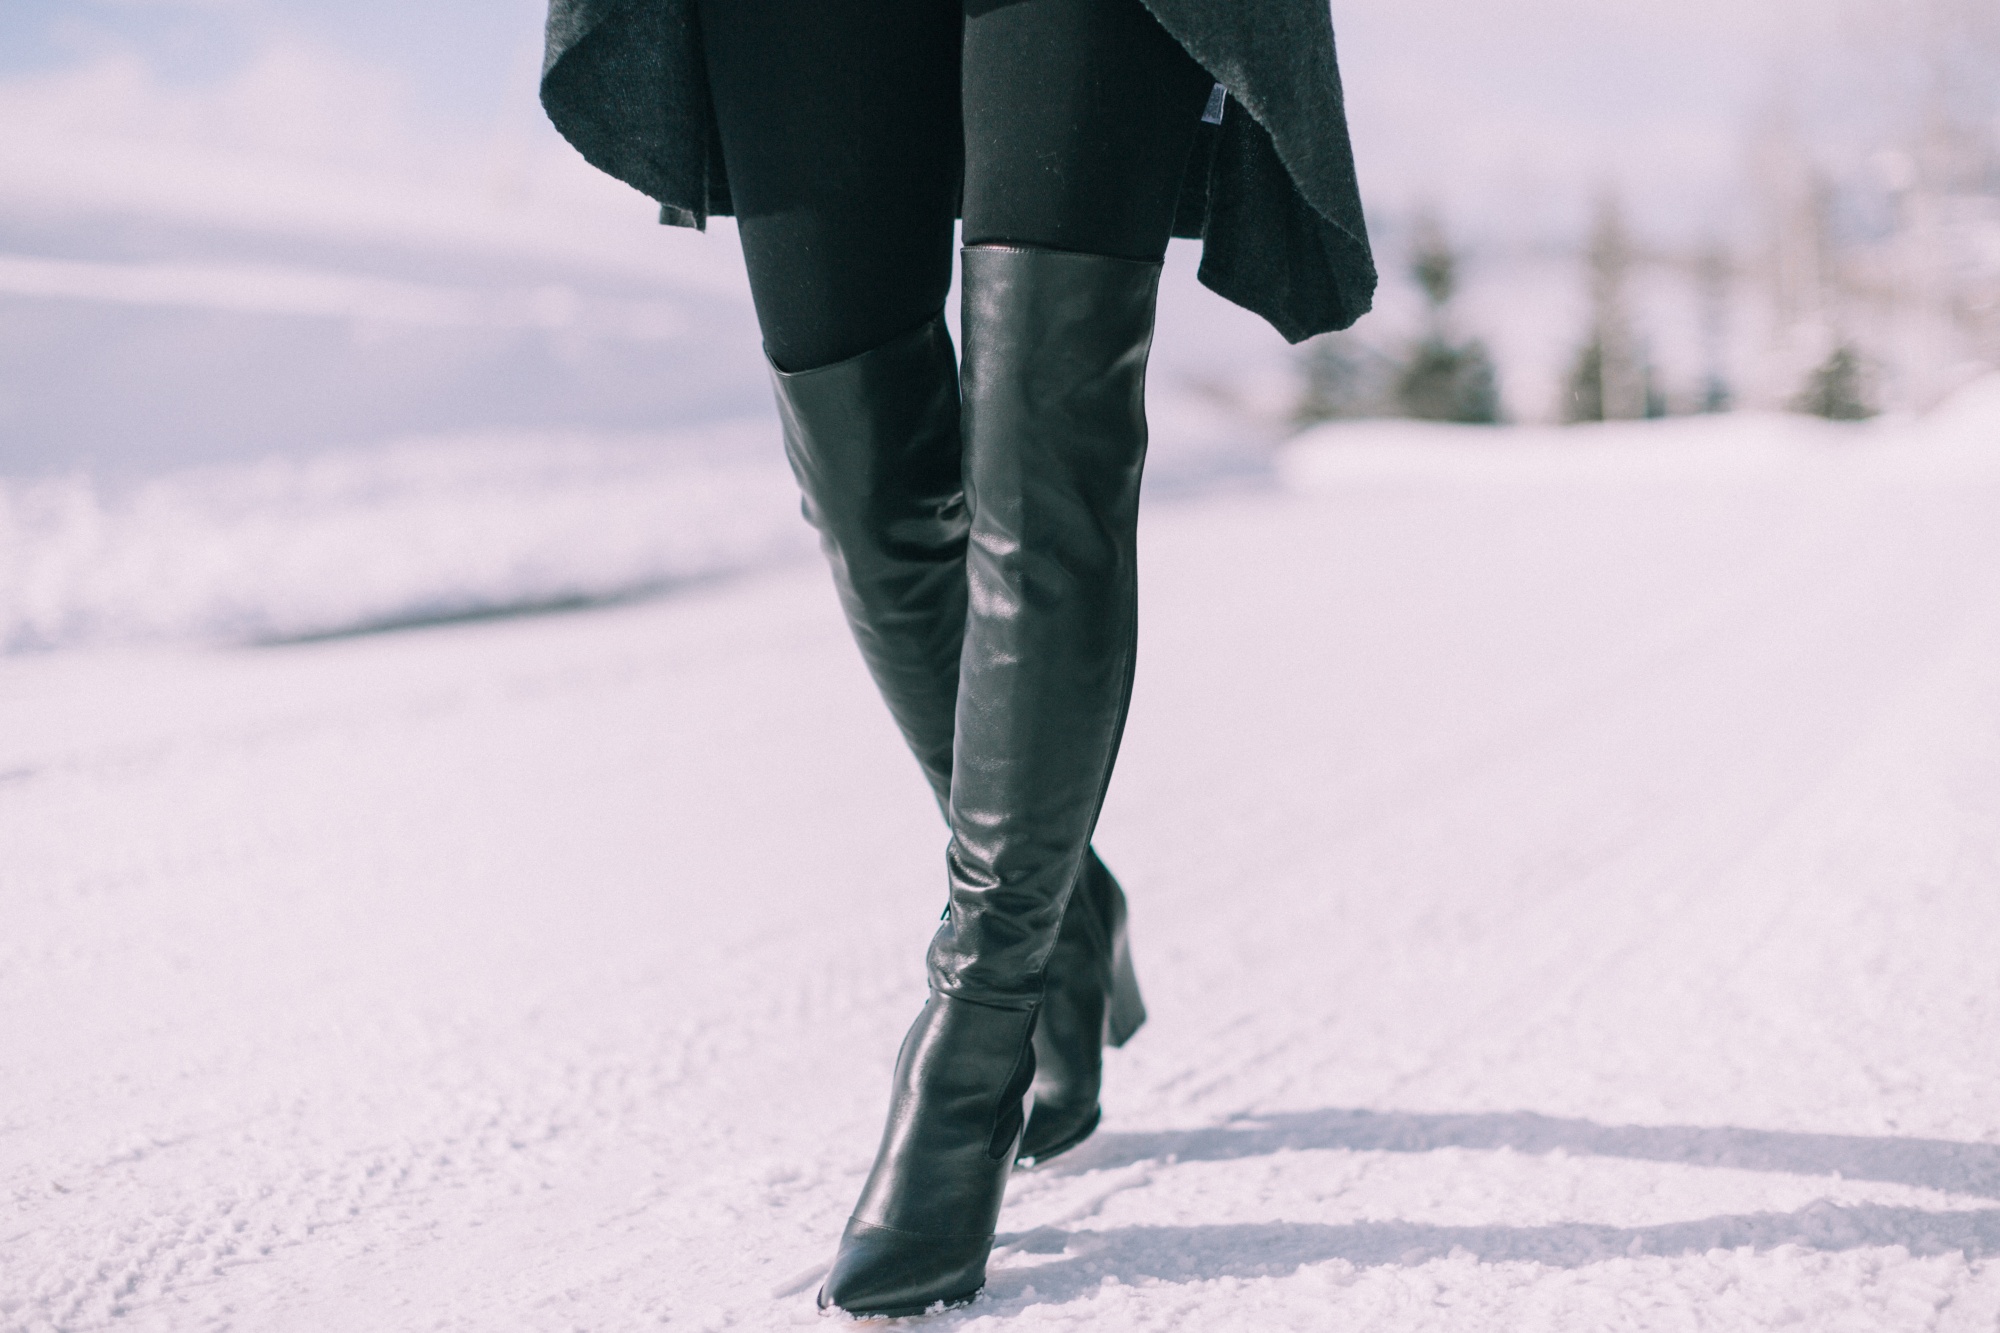 sam edelman Valda black over the knee boots over Spanx seamless leggings in Telluride Colorado